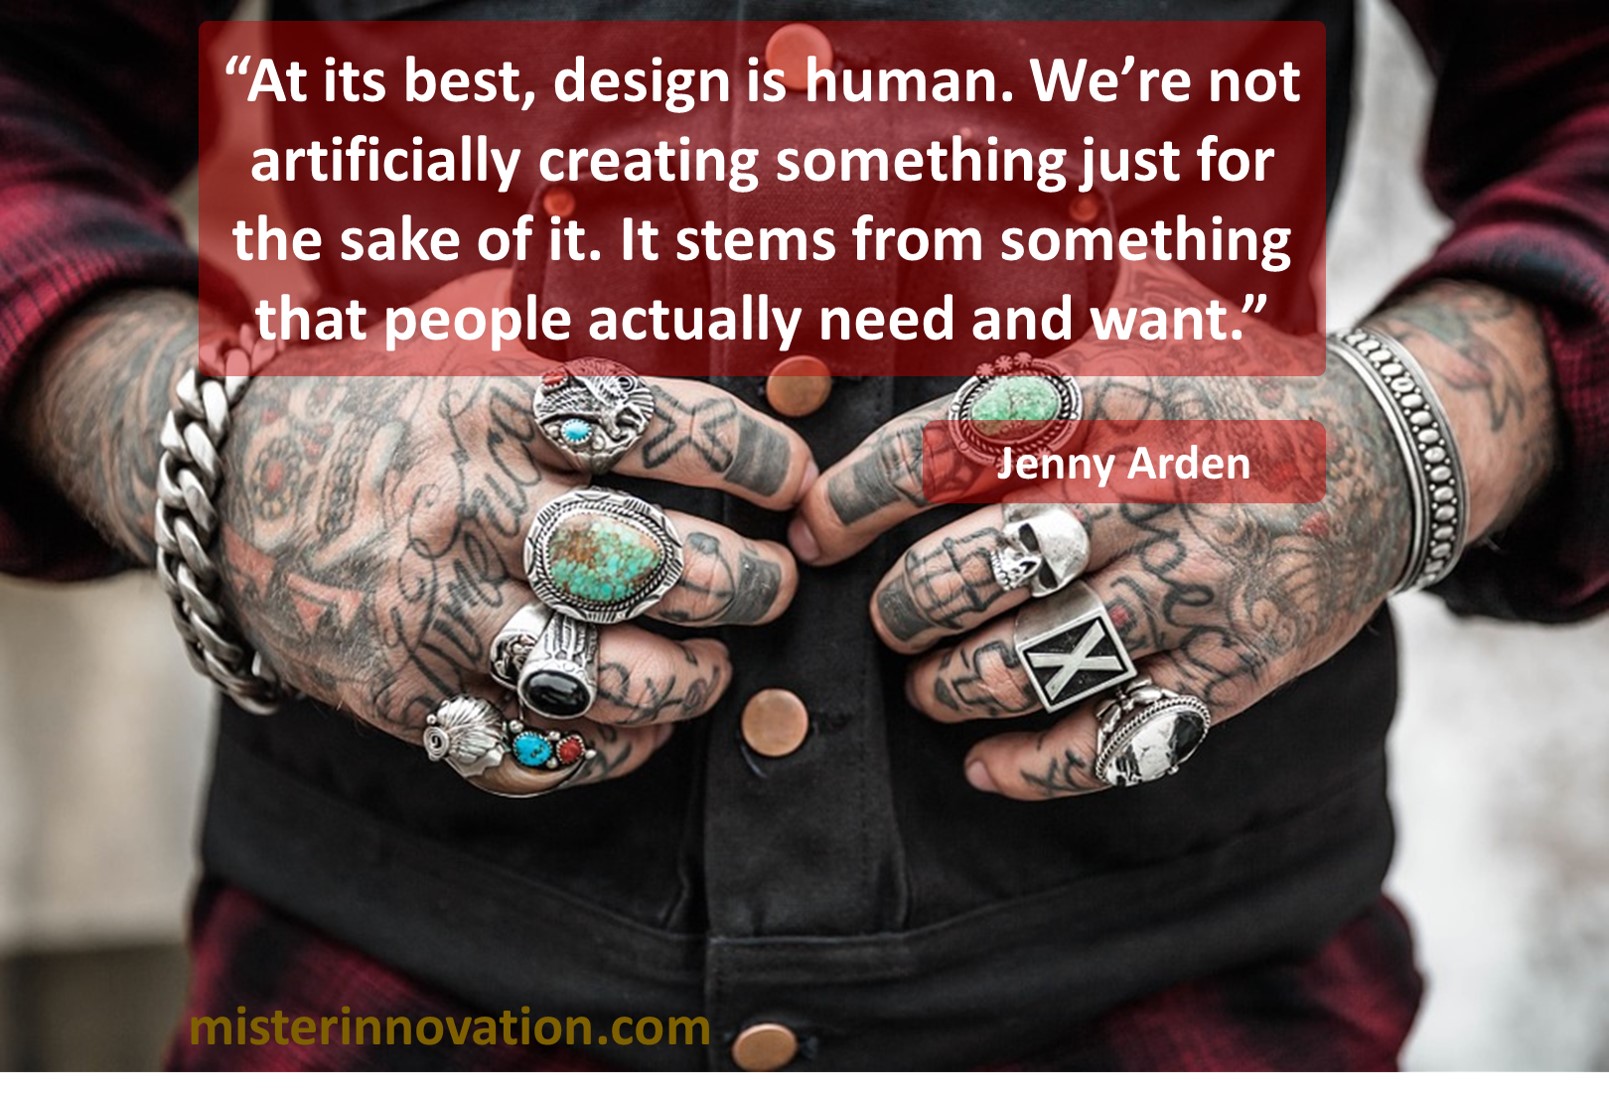 Jenny Arden Design is Human